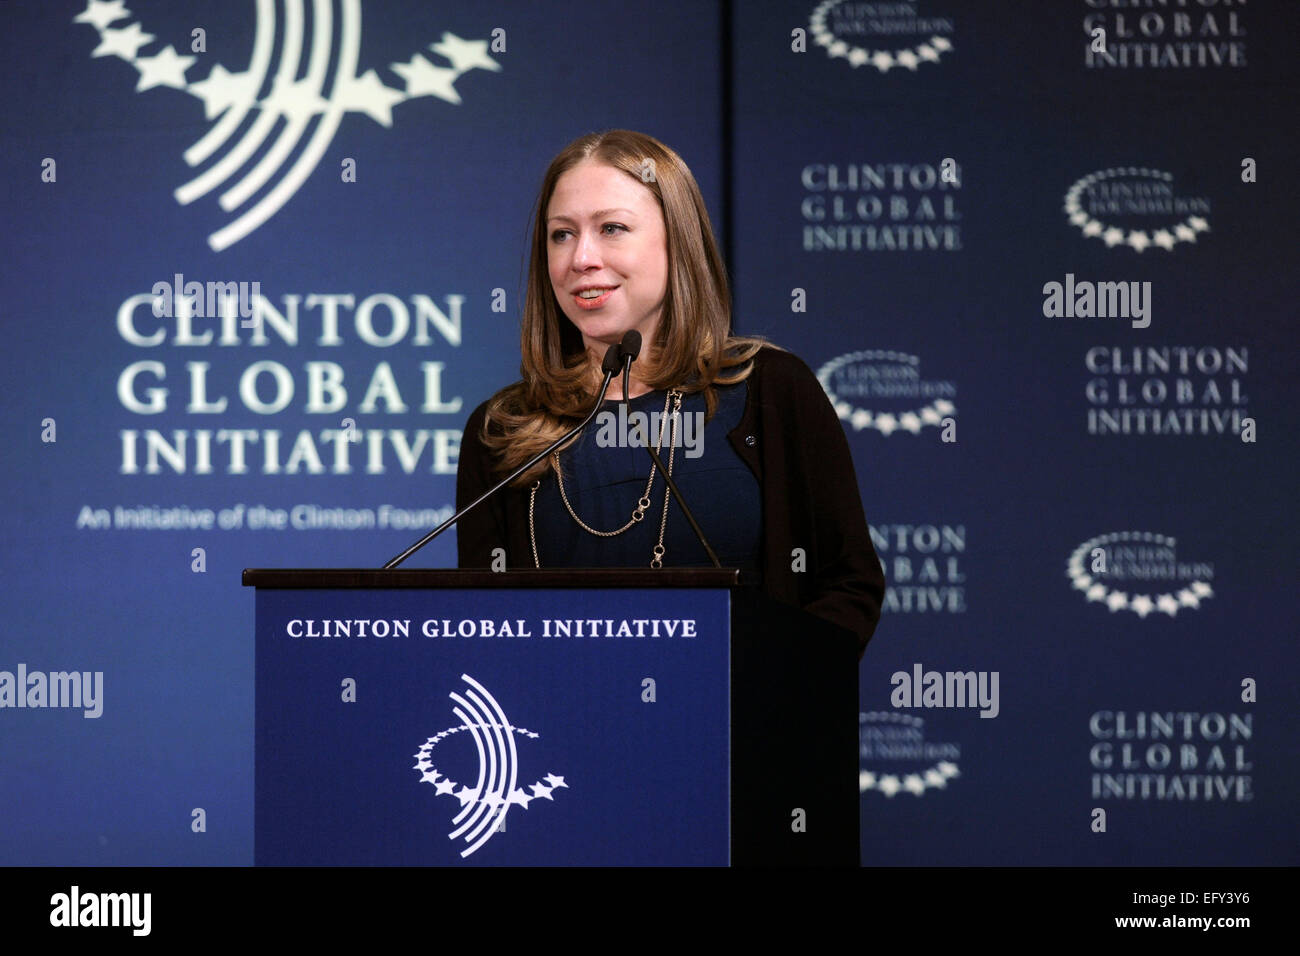 Chelsea Clinton beherbergt die 2015-Wintermeeting im Grand Hyatt Hotel am 10. Februar in New York City, im 10. Jahr der Clinton Global Initiative (CGI). / picture Alliance Stockfoto